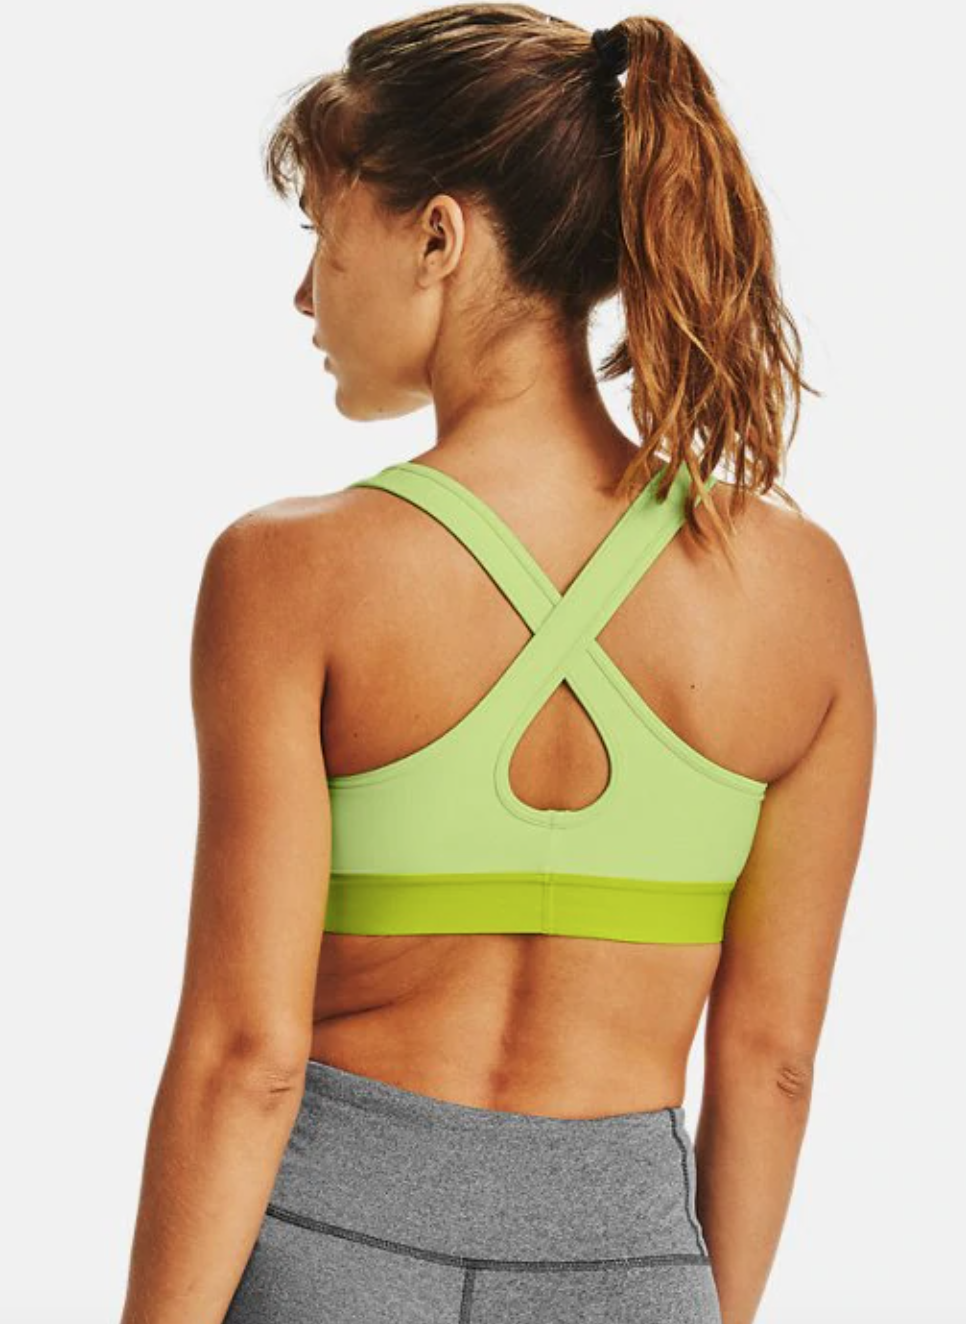 a model in a lime green sports bra